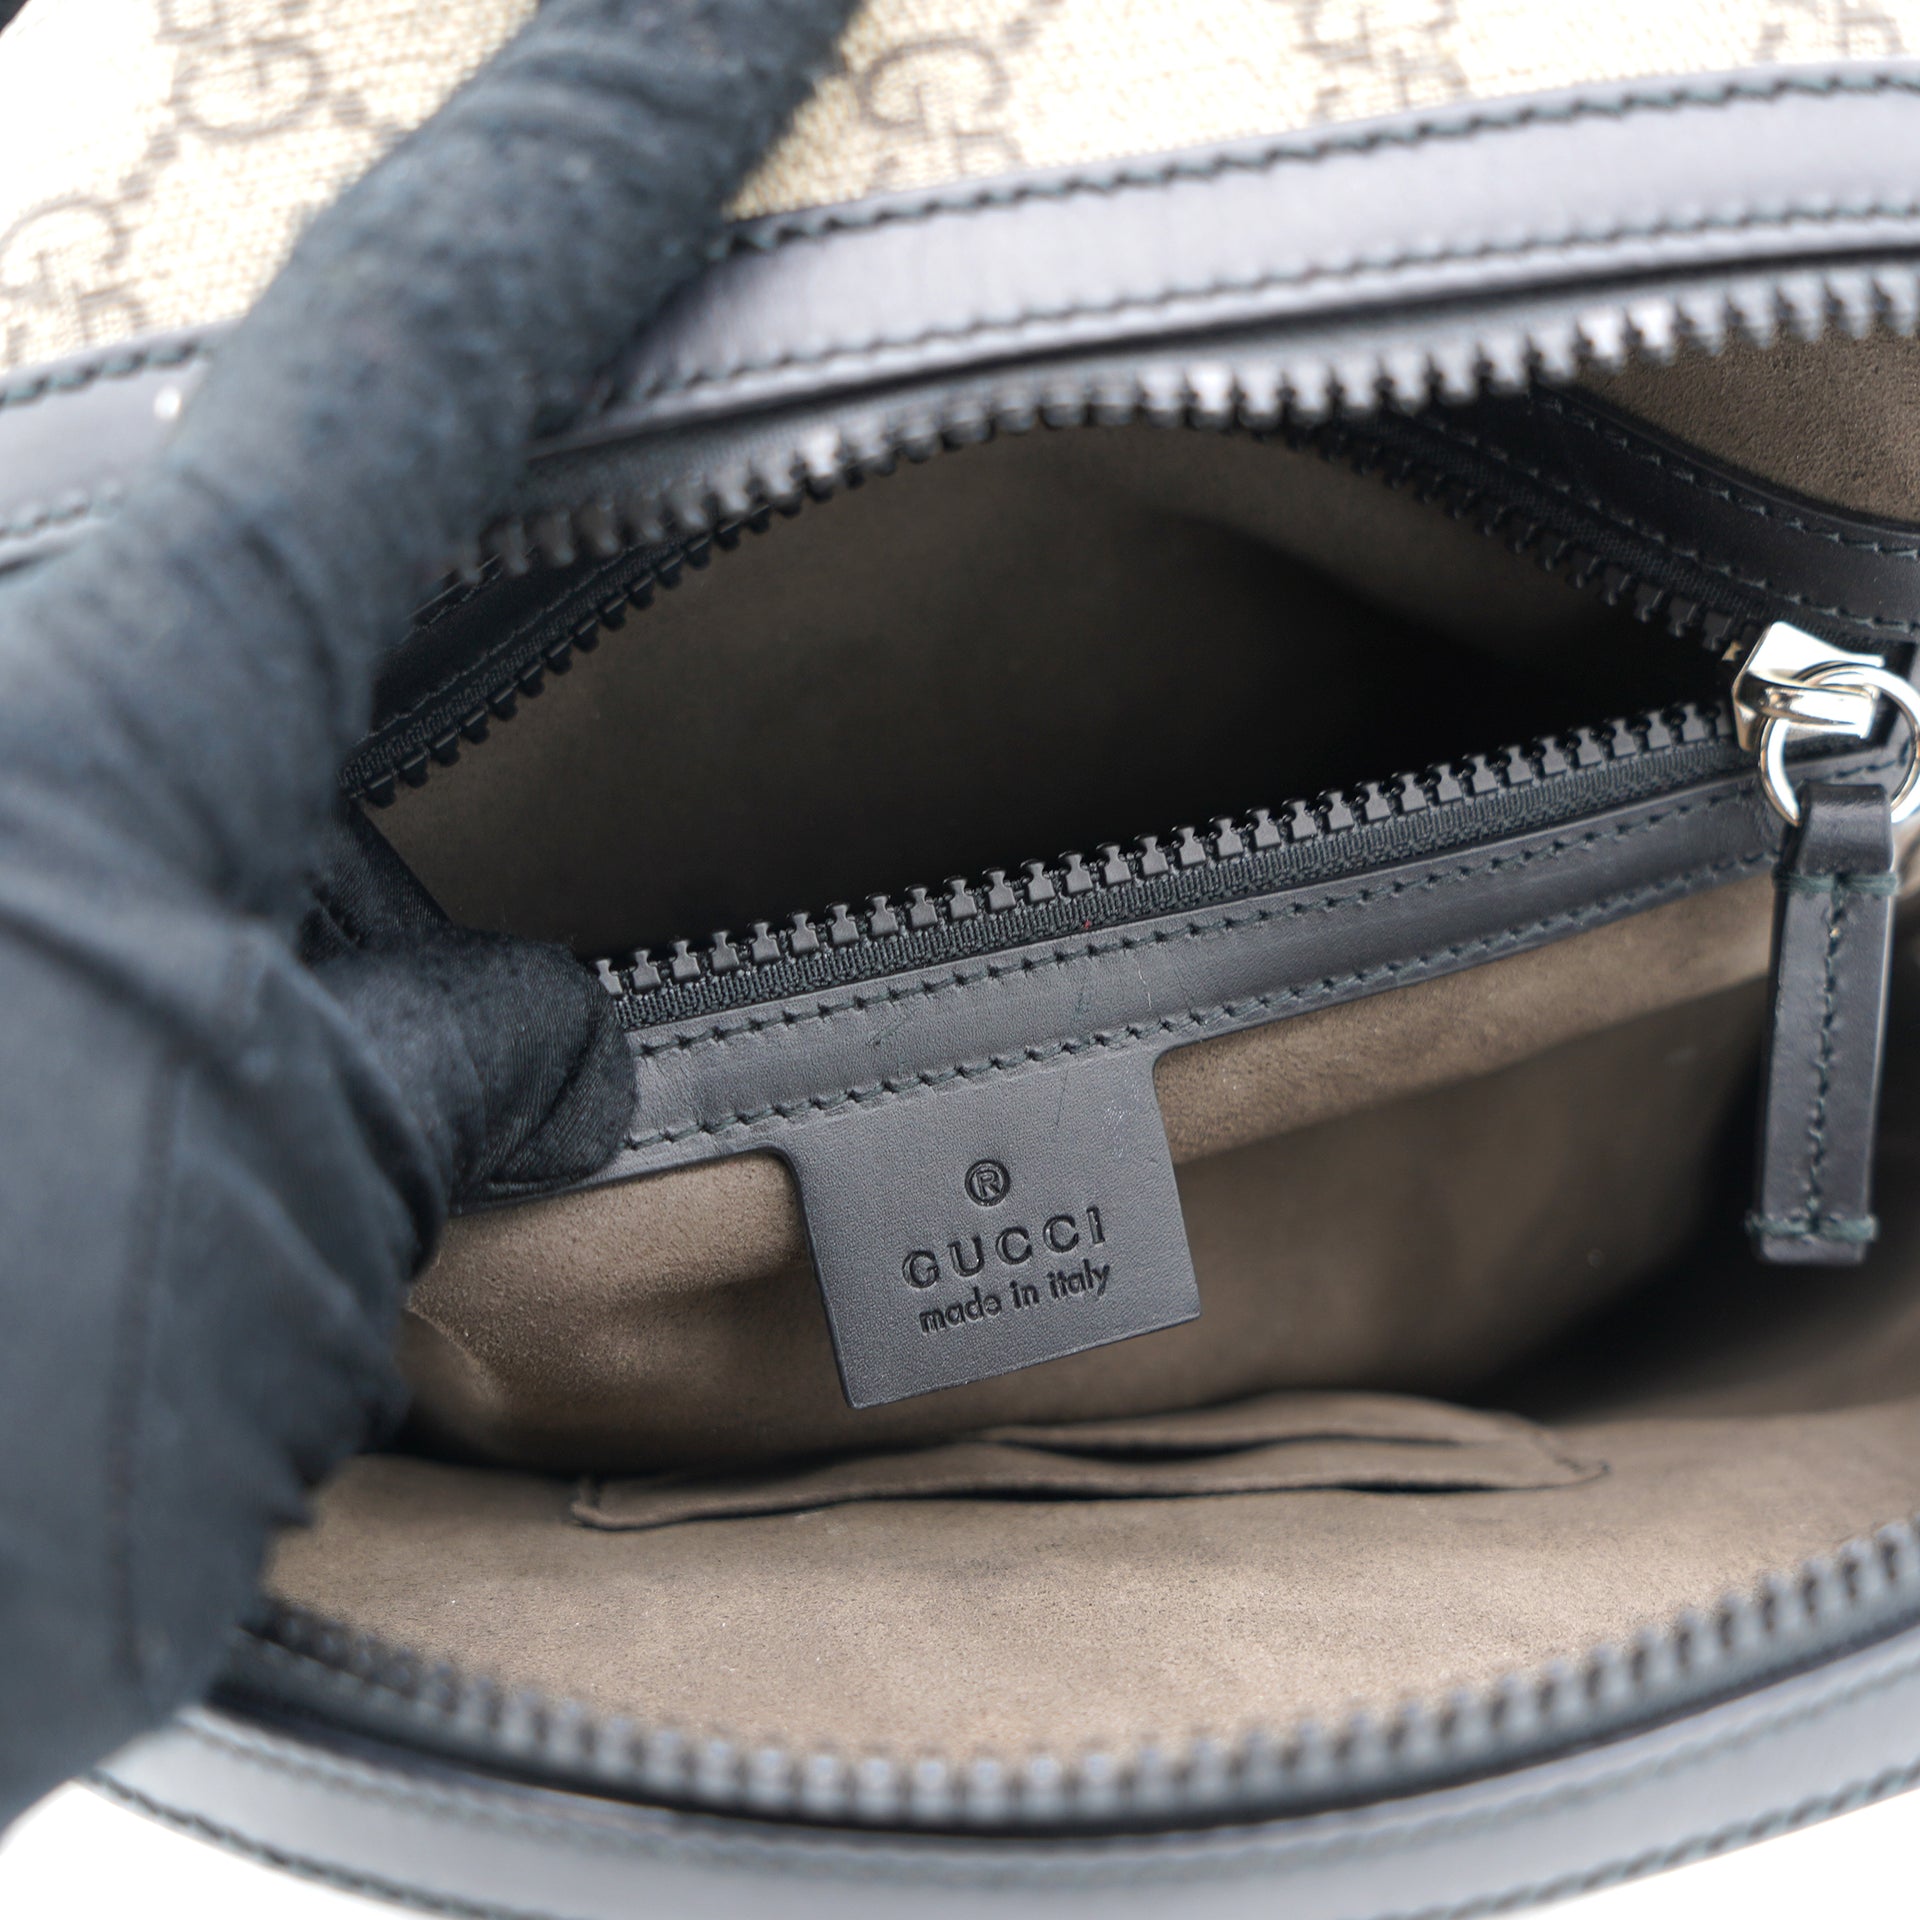 Gucci 406370 Eden GG Supreme Canvas Black Leather Backpack DOIXZDE